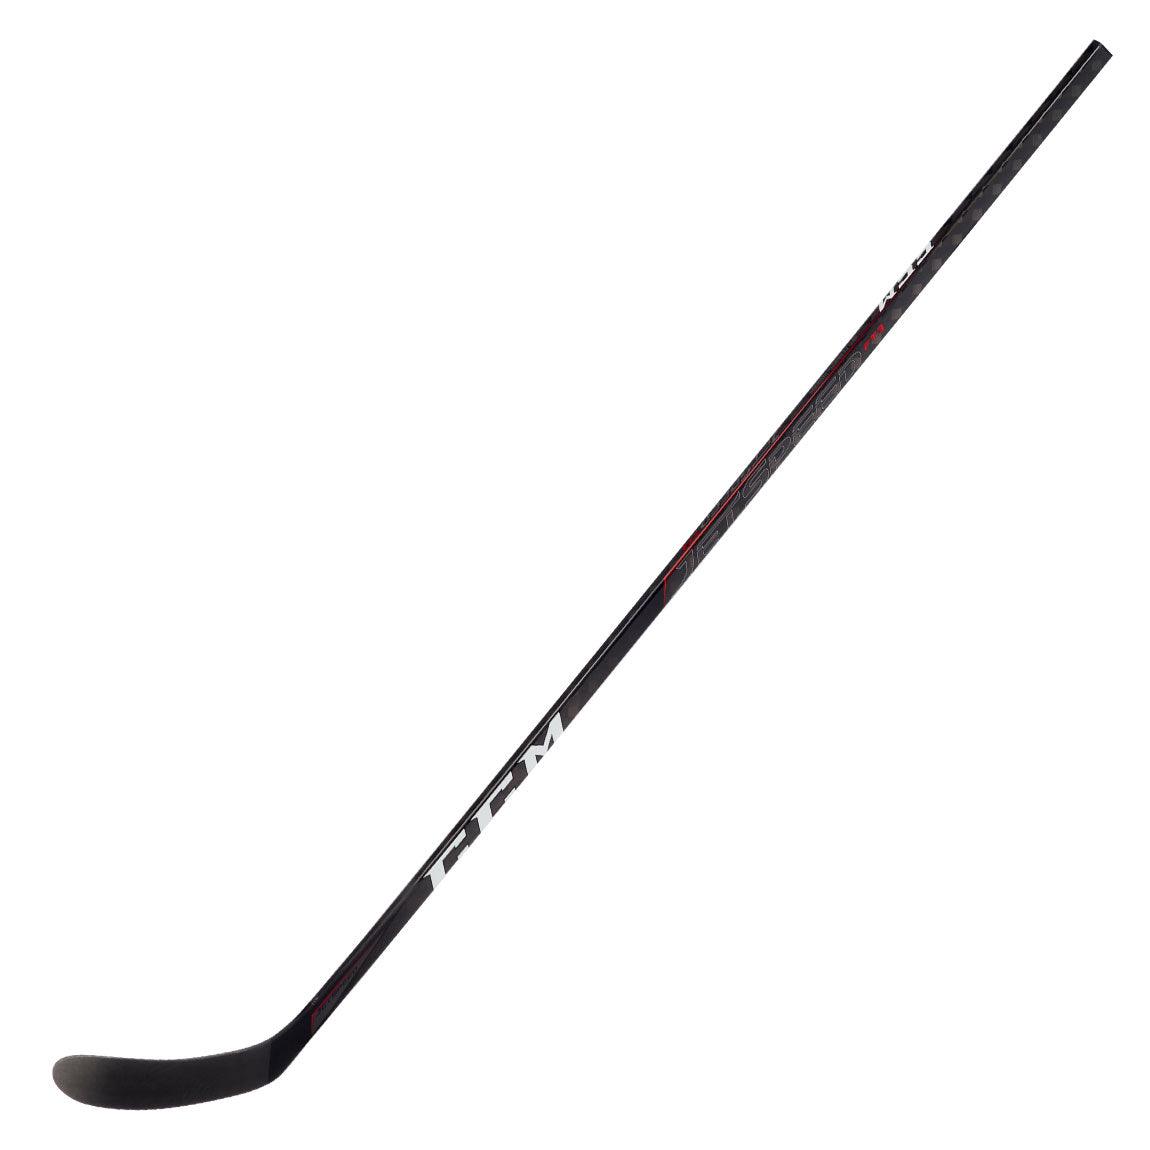 Jetspeed FT3 Hockey Stick - Intermediate - Sports Excellence